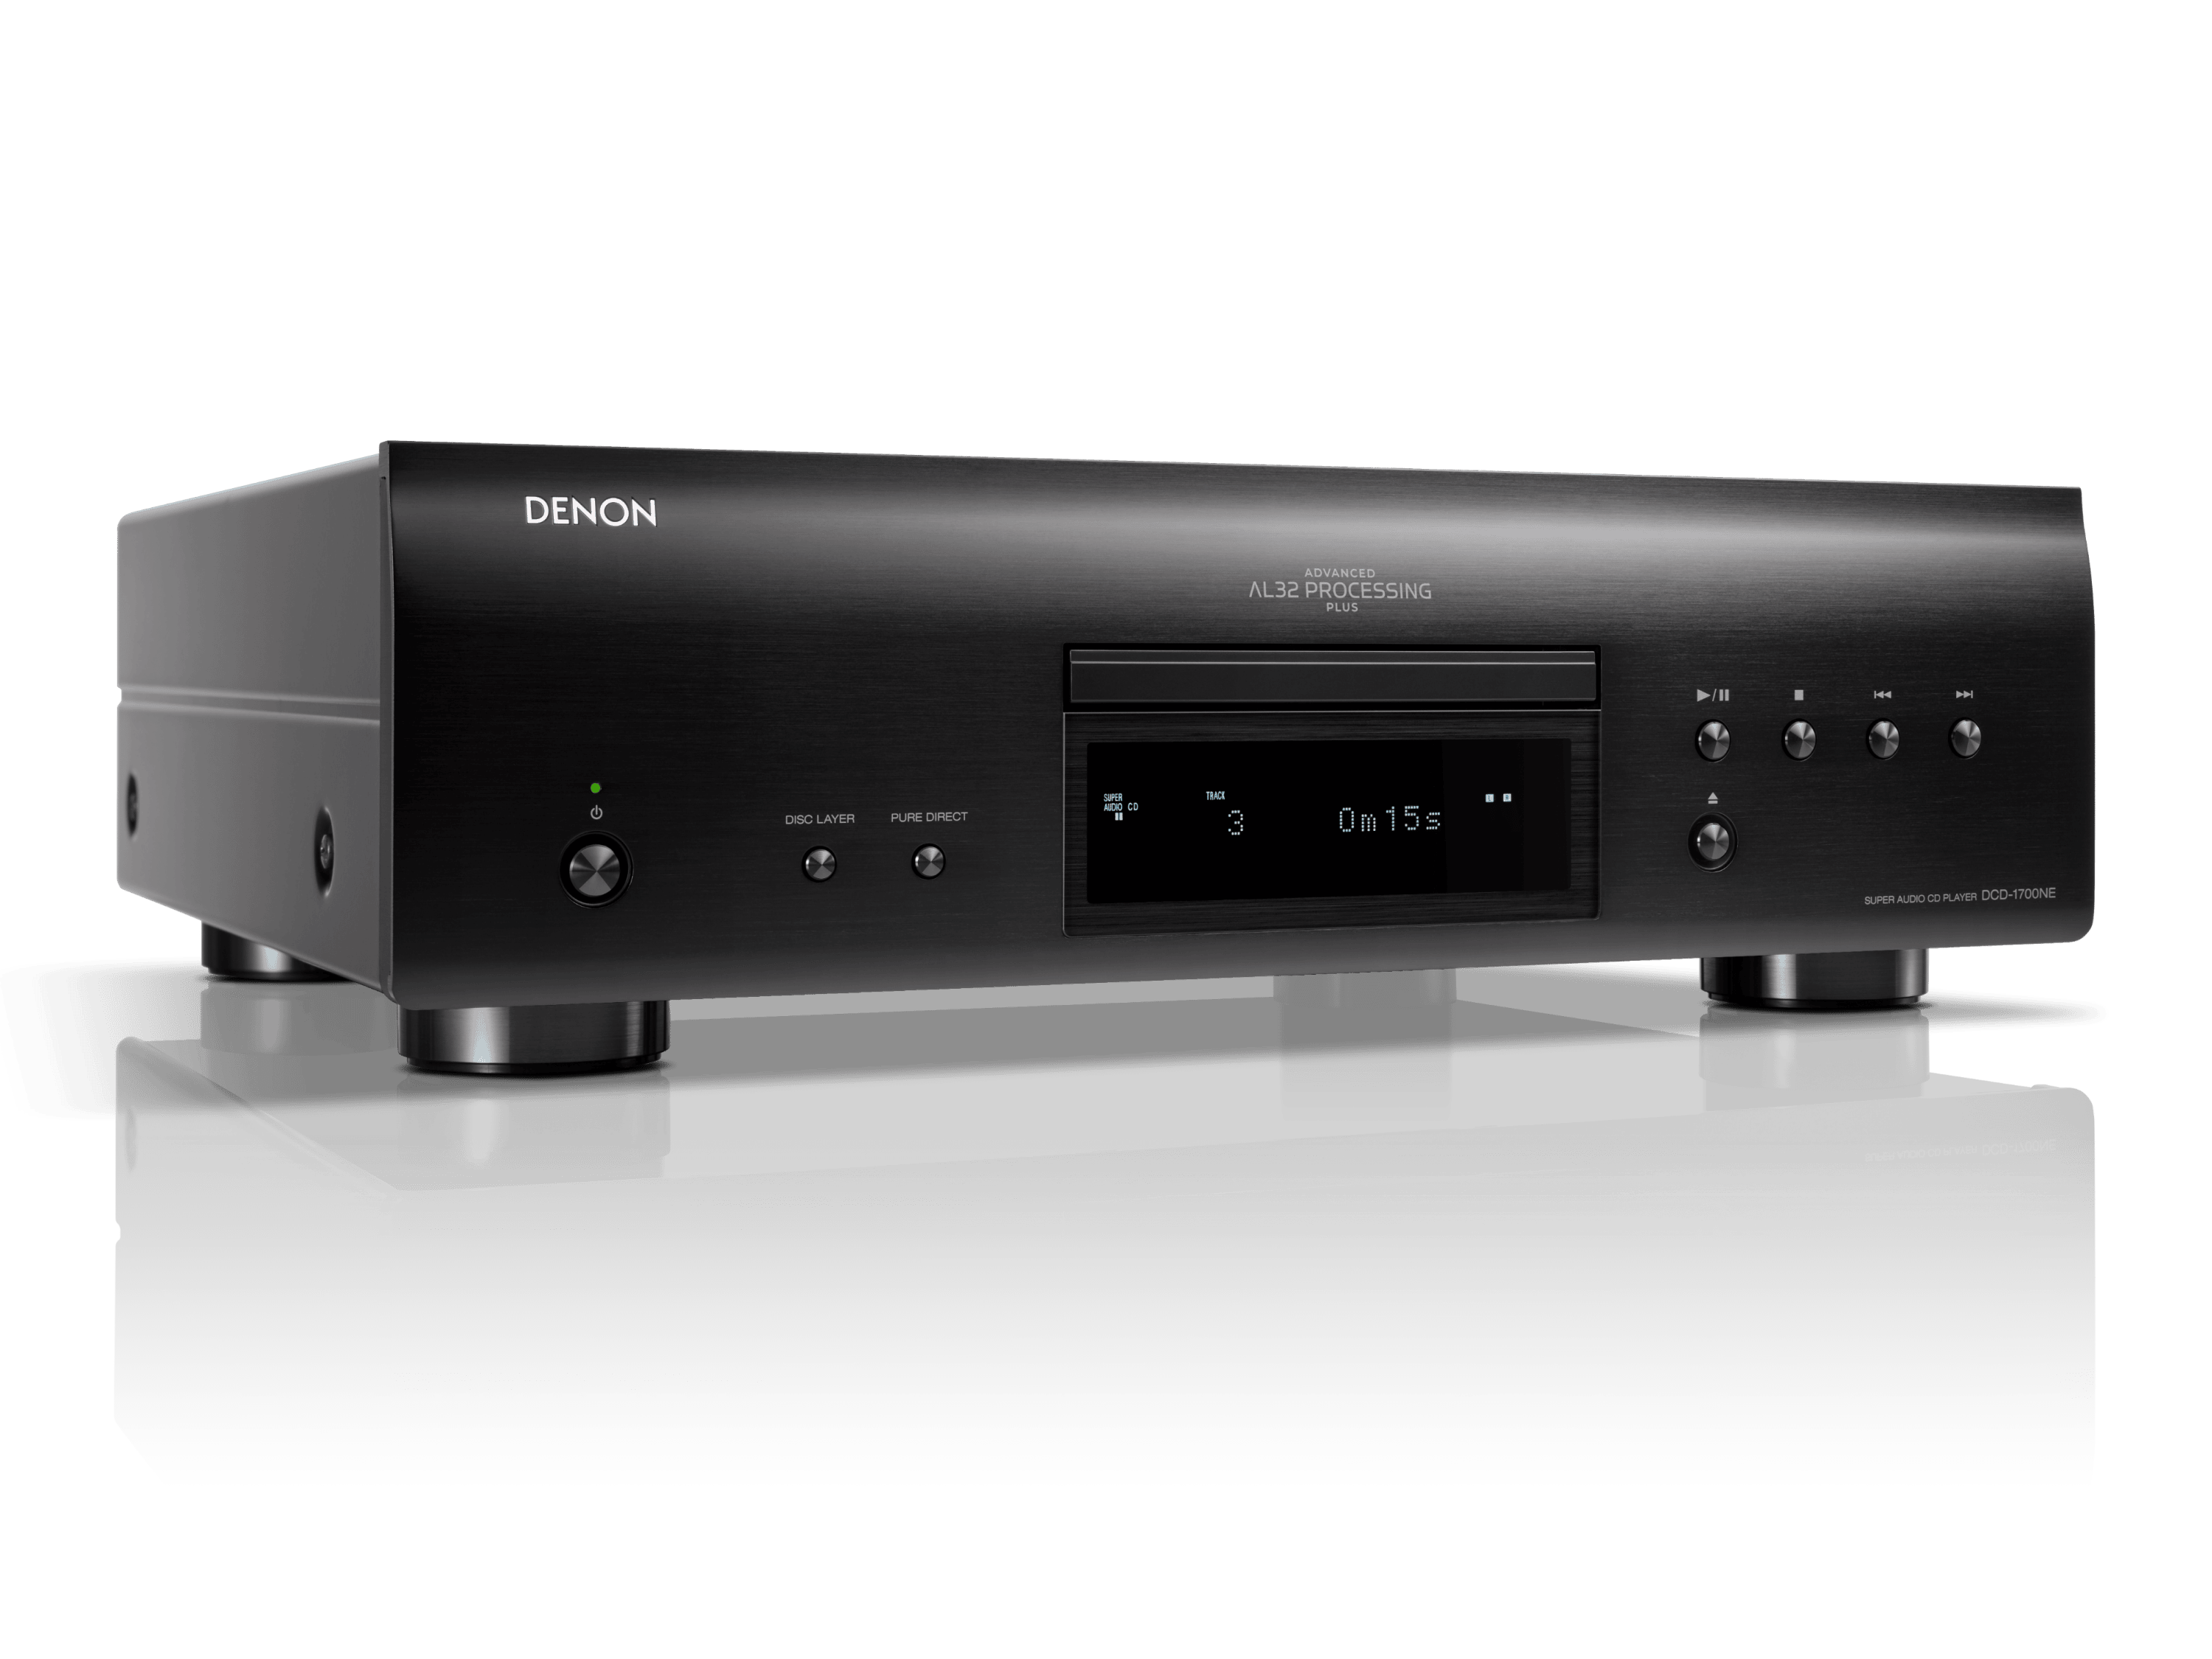 DCD-1700NE - CD/SACD-Player Europe AL32 Processing Plus Denon mit Advanced | - DCD-1700NE